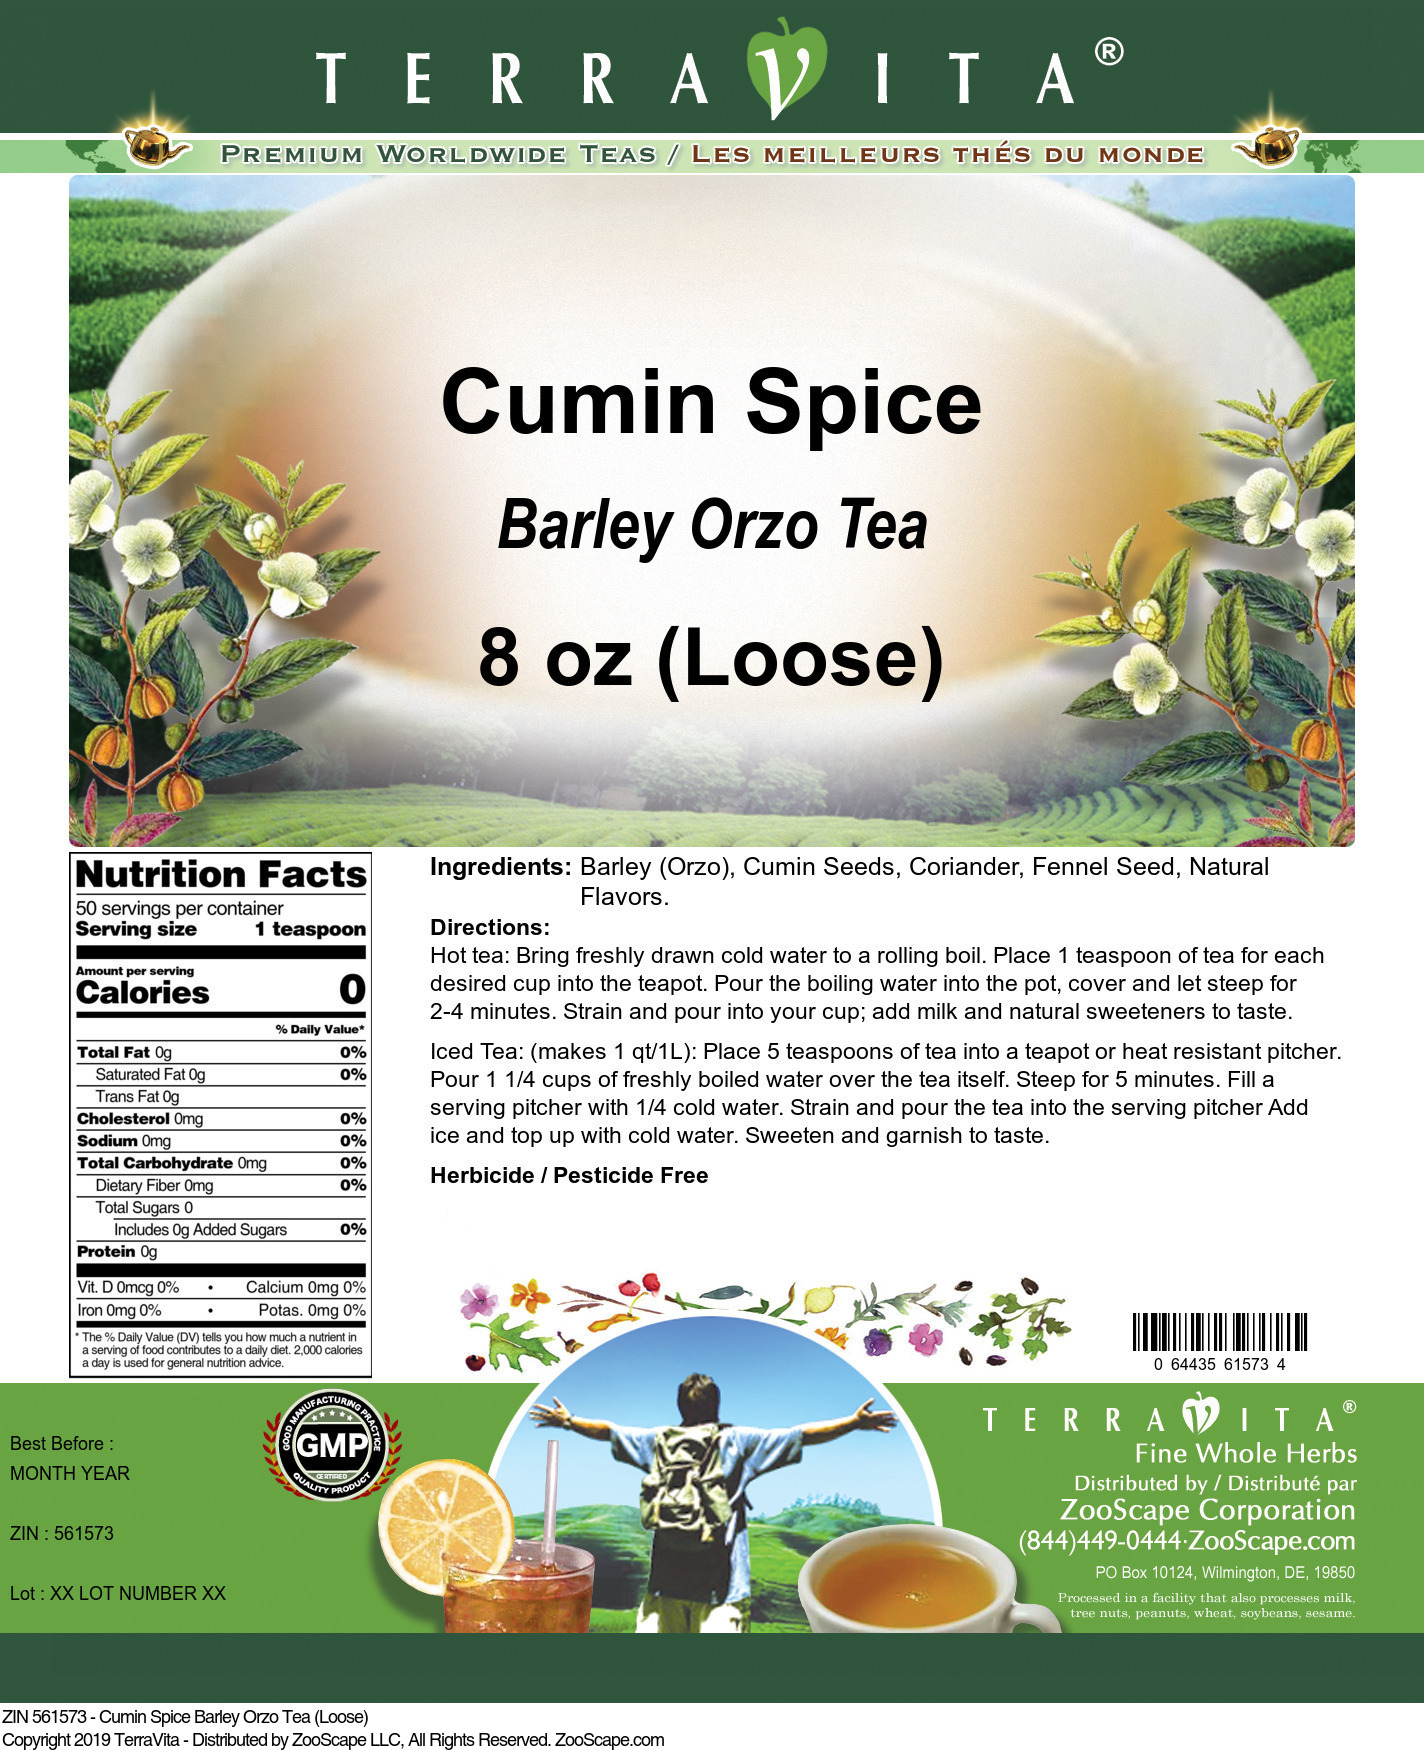 Cumin Spice Barley Orzo Tea (Loose) - Label